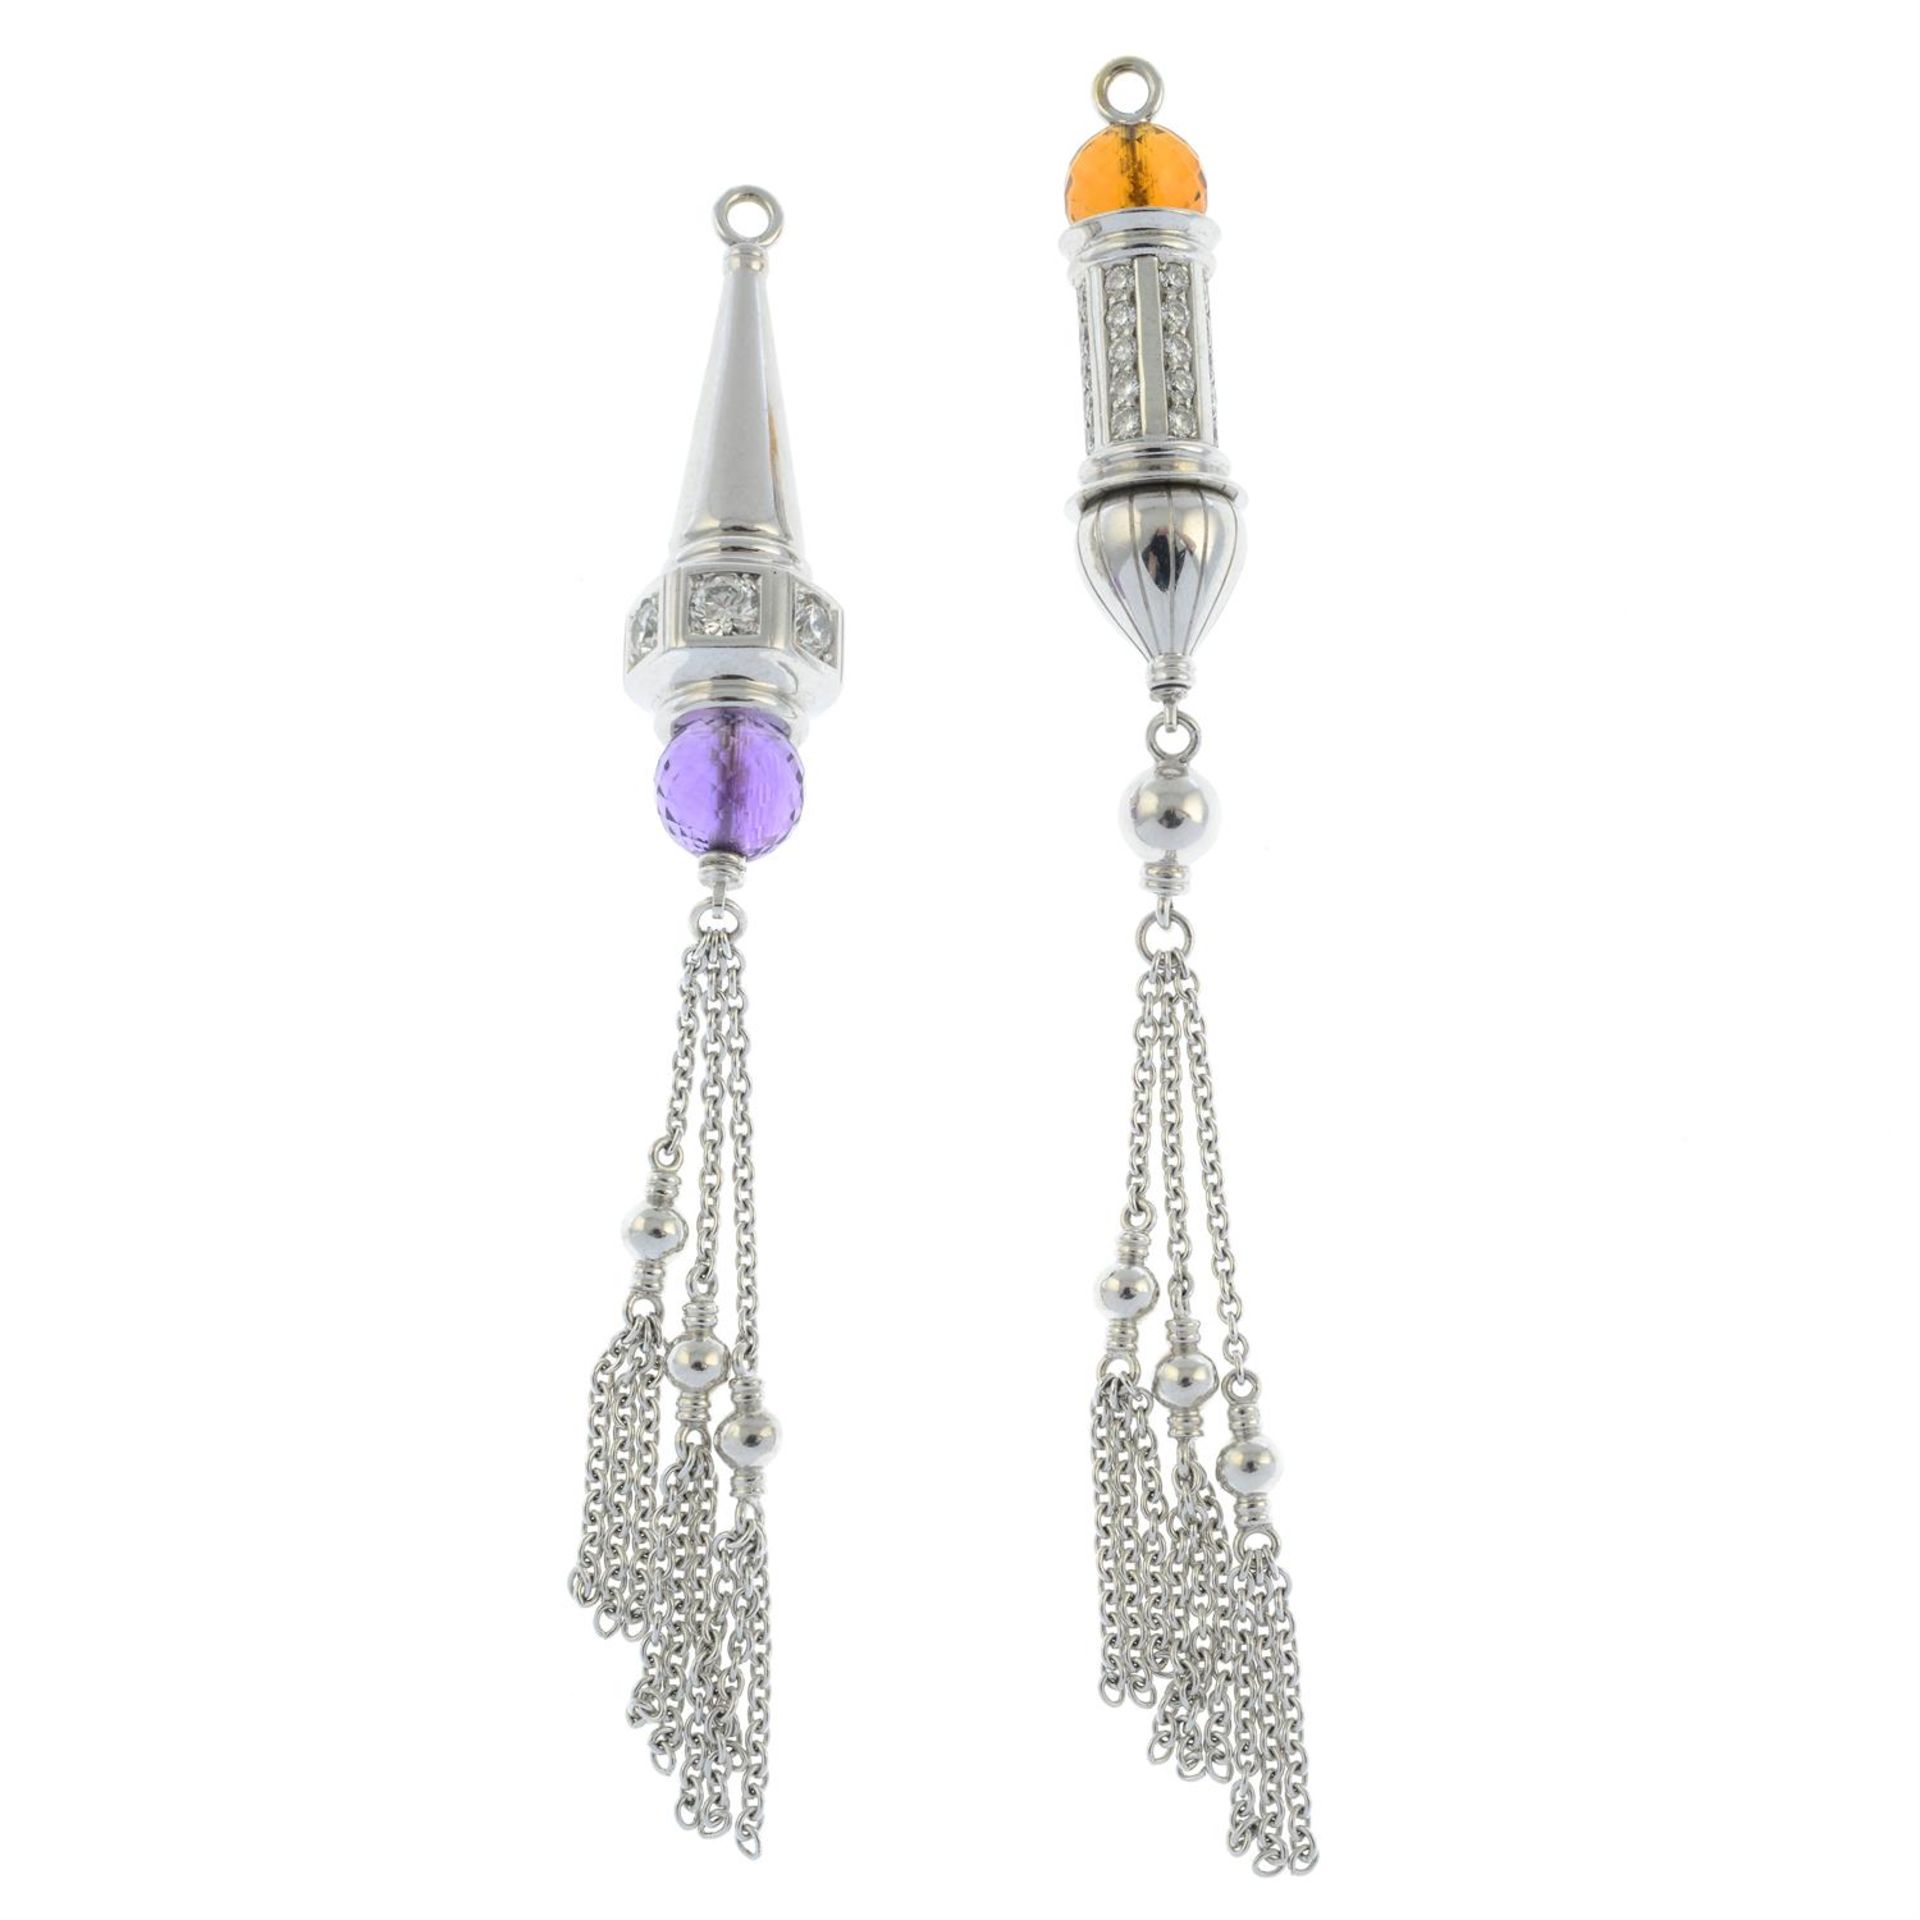 An amethyst and diamond tassel pendant, together with a citrine and diamond tassel pendant. - Image 2 of 3